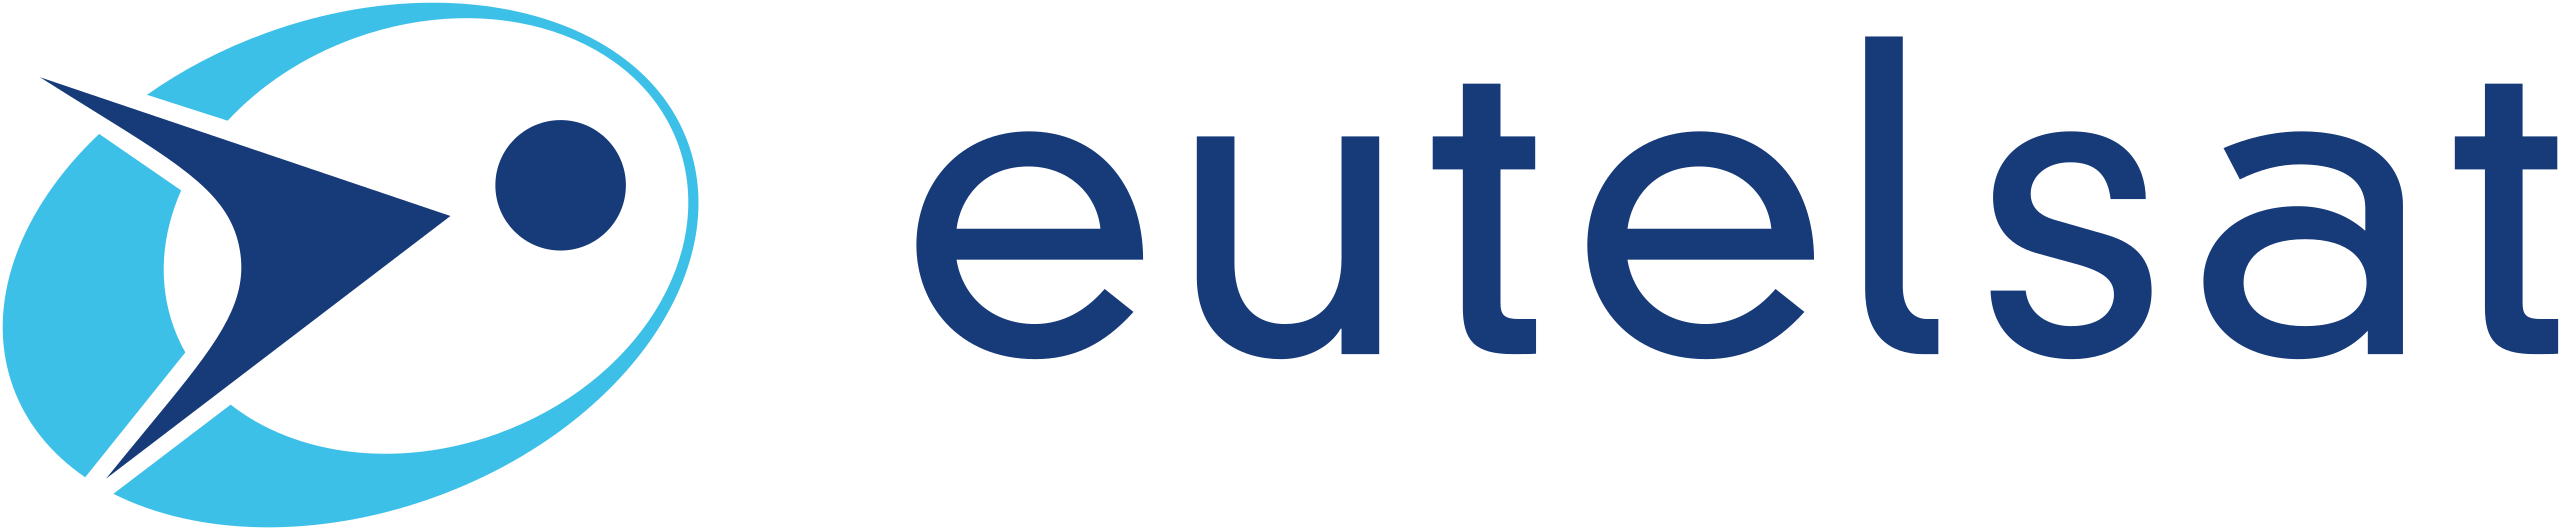 2560px-Eutelsat_logo